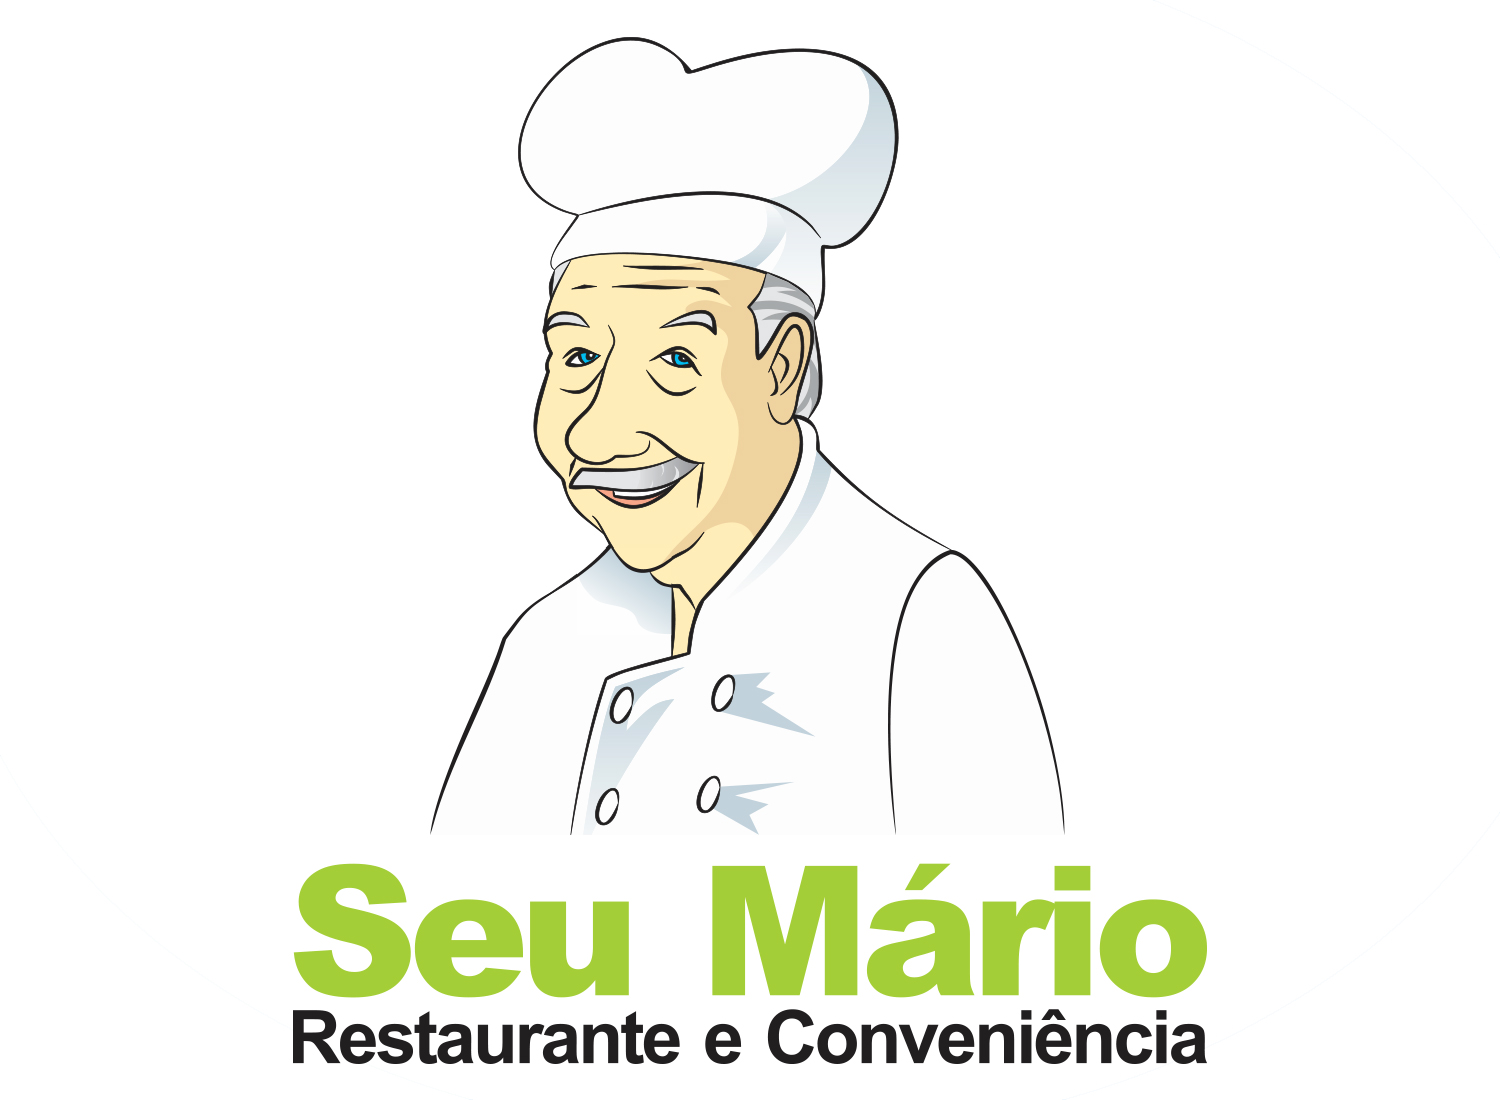 Seu Mário Fachada Restaurante